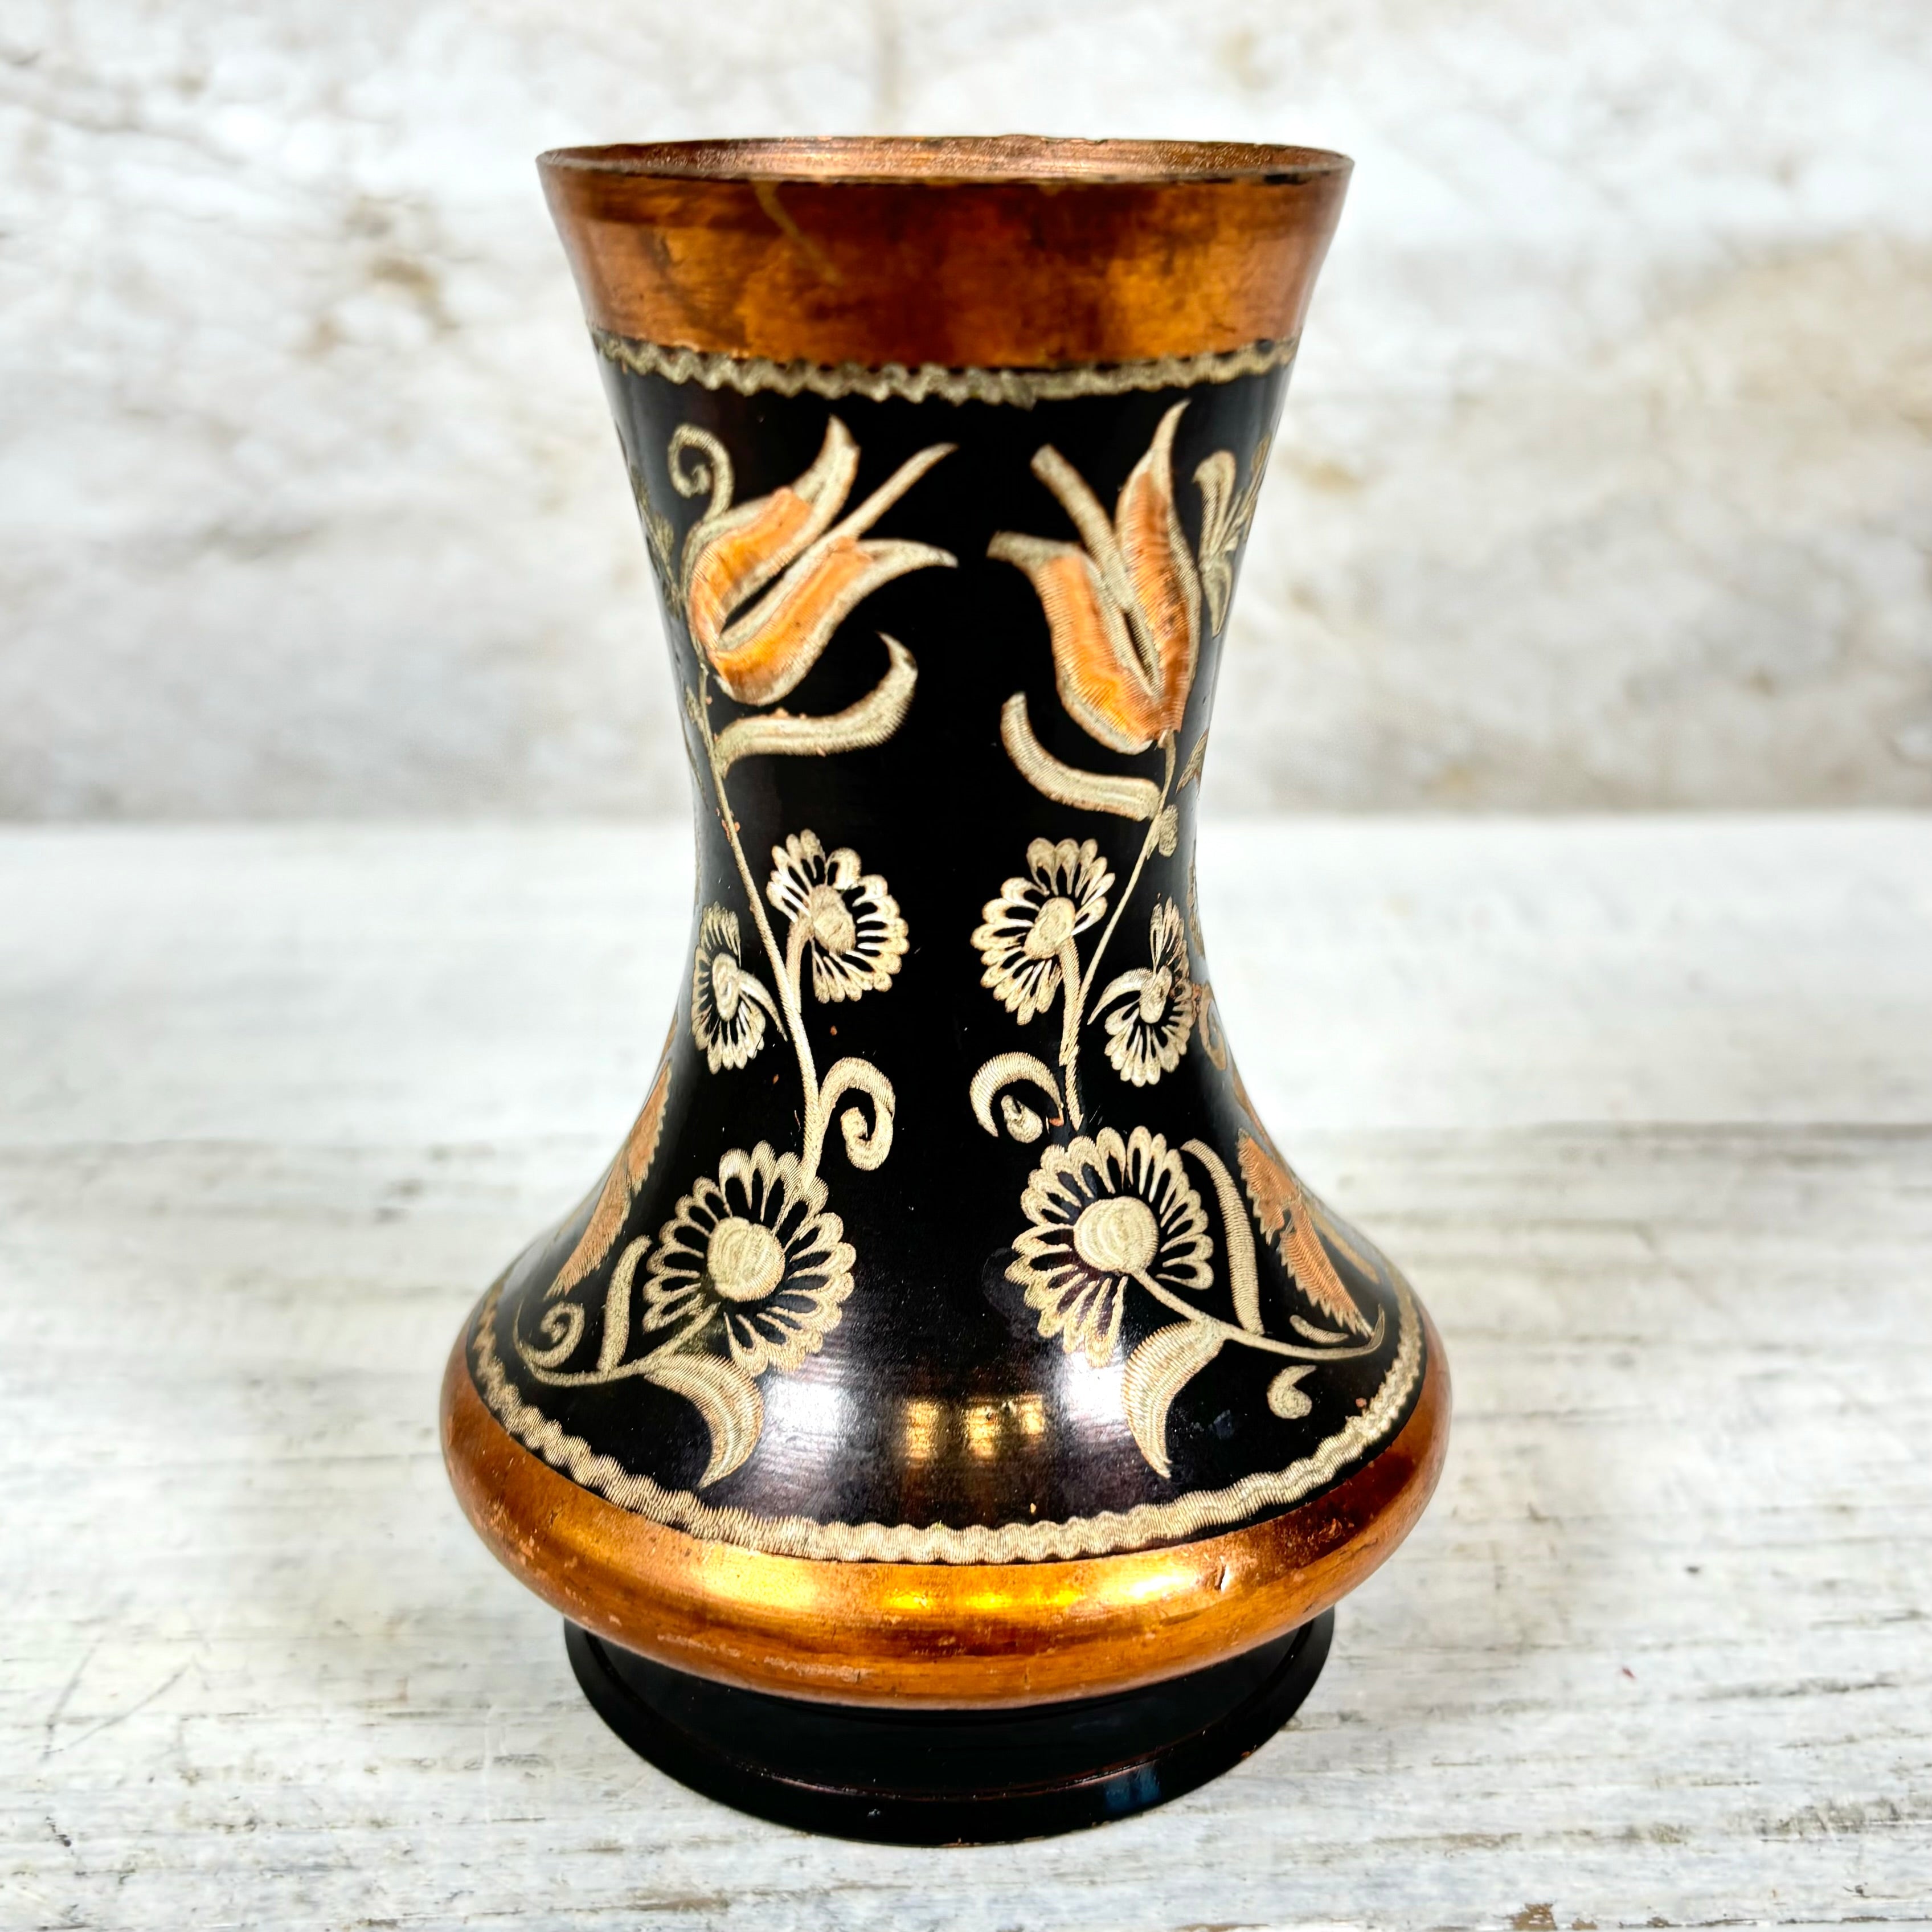 Vintage Copper Hand-Engraved Damascus Syrian Vase